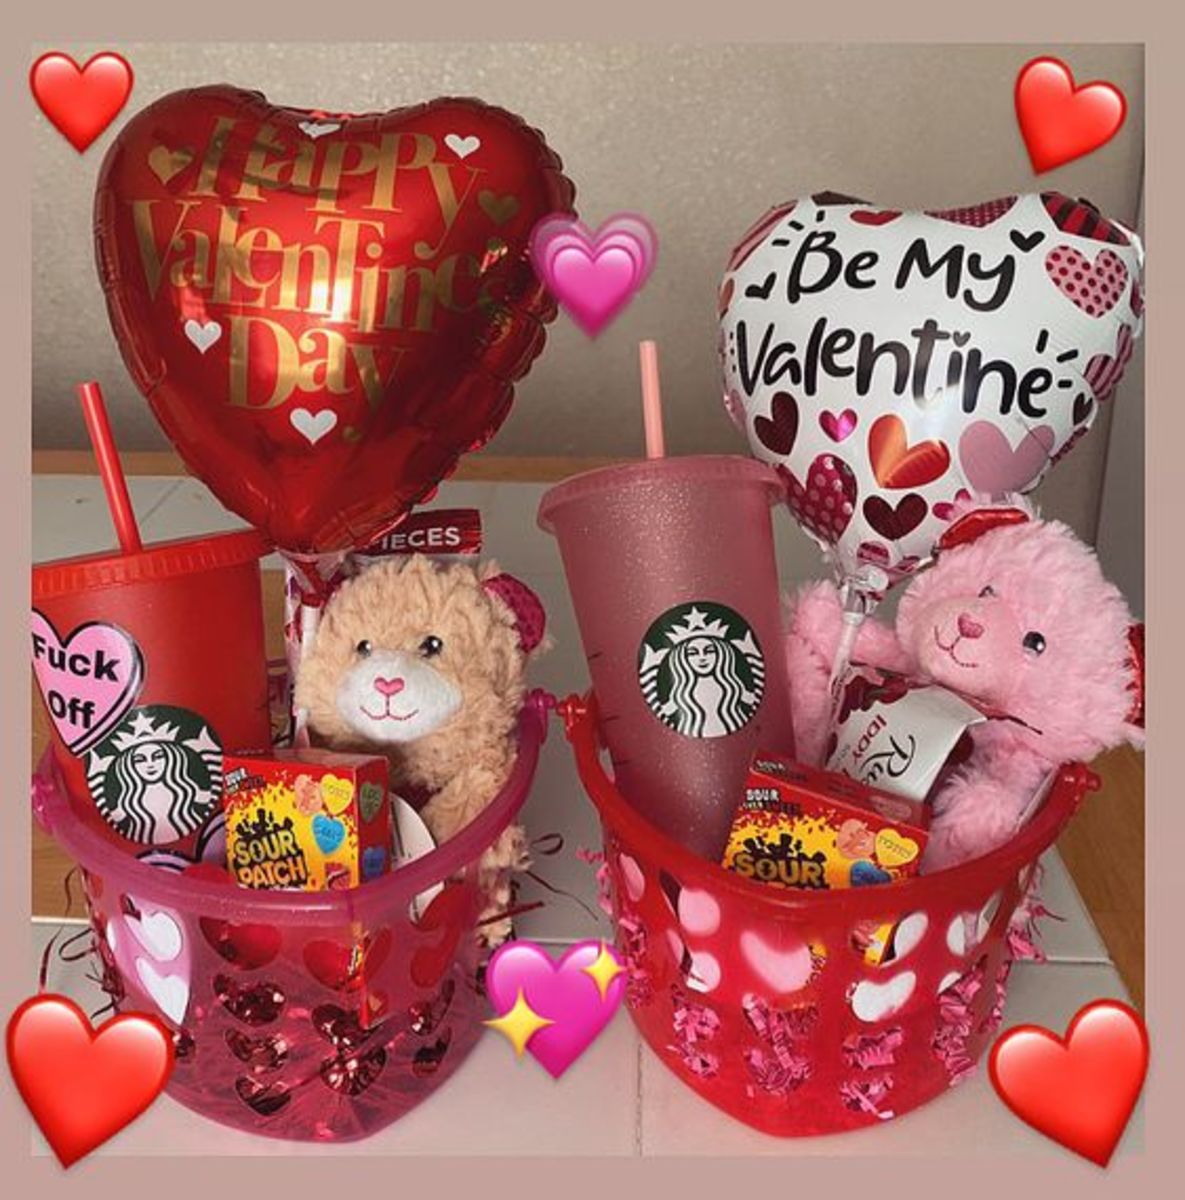 50+ Diy Romantic Valentine's Day Ideas for Him